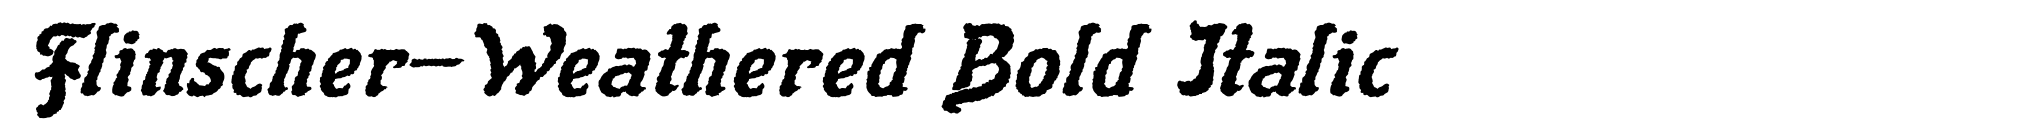 Flinscher-Weathered Bold Italic image